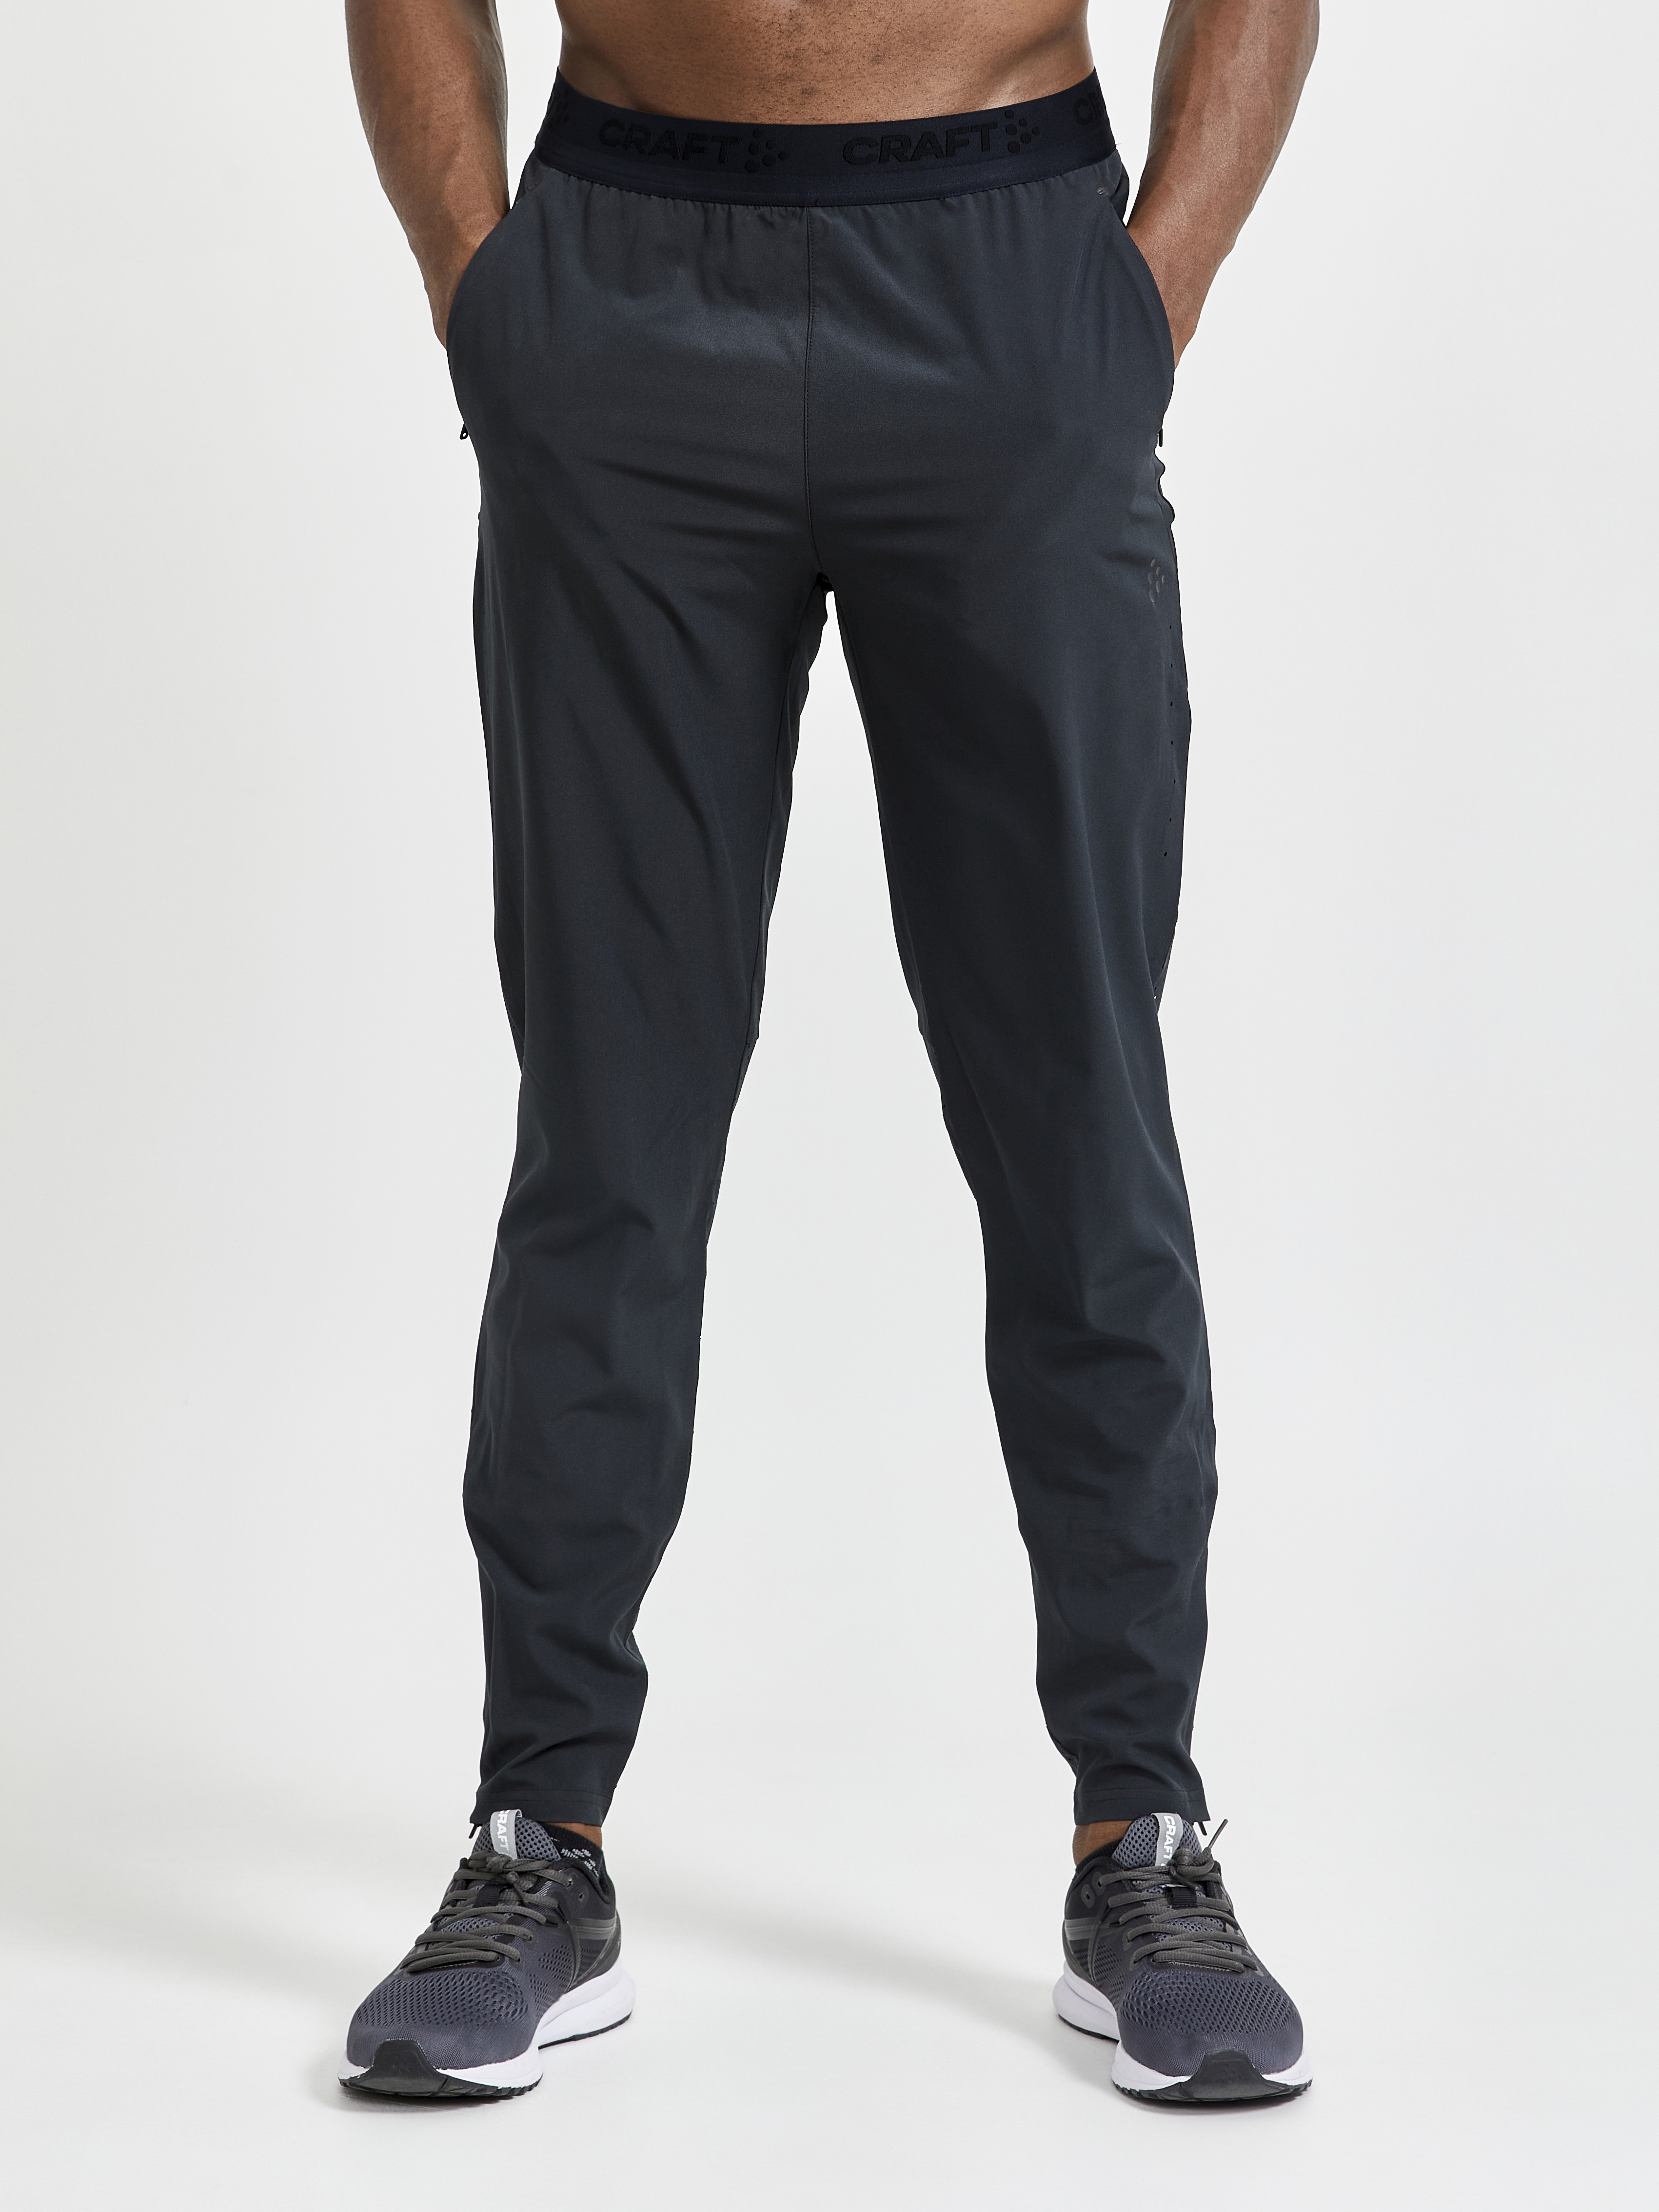 ADV Essence Perforated Pants M - Black | Craft Sportswear